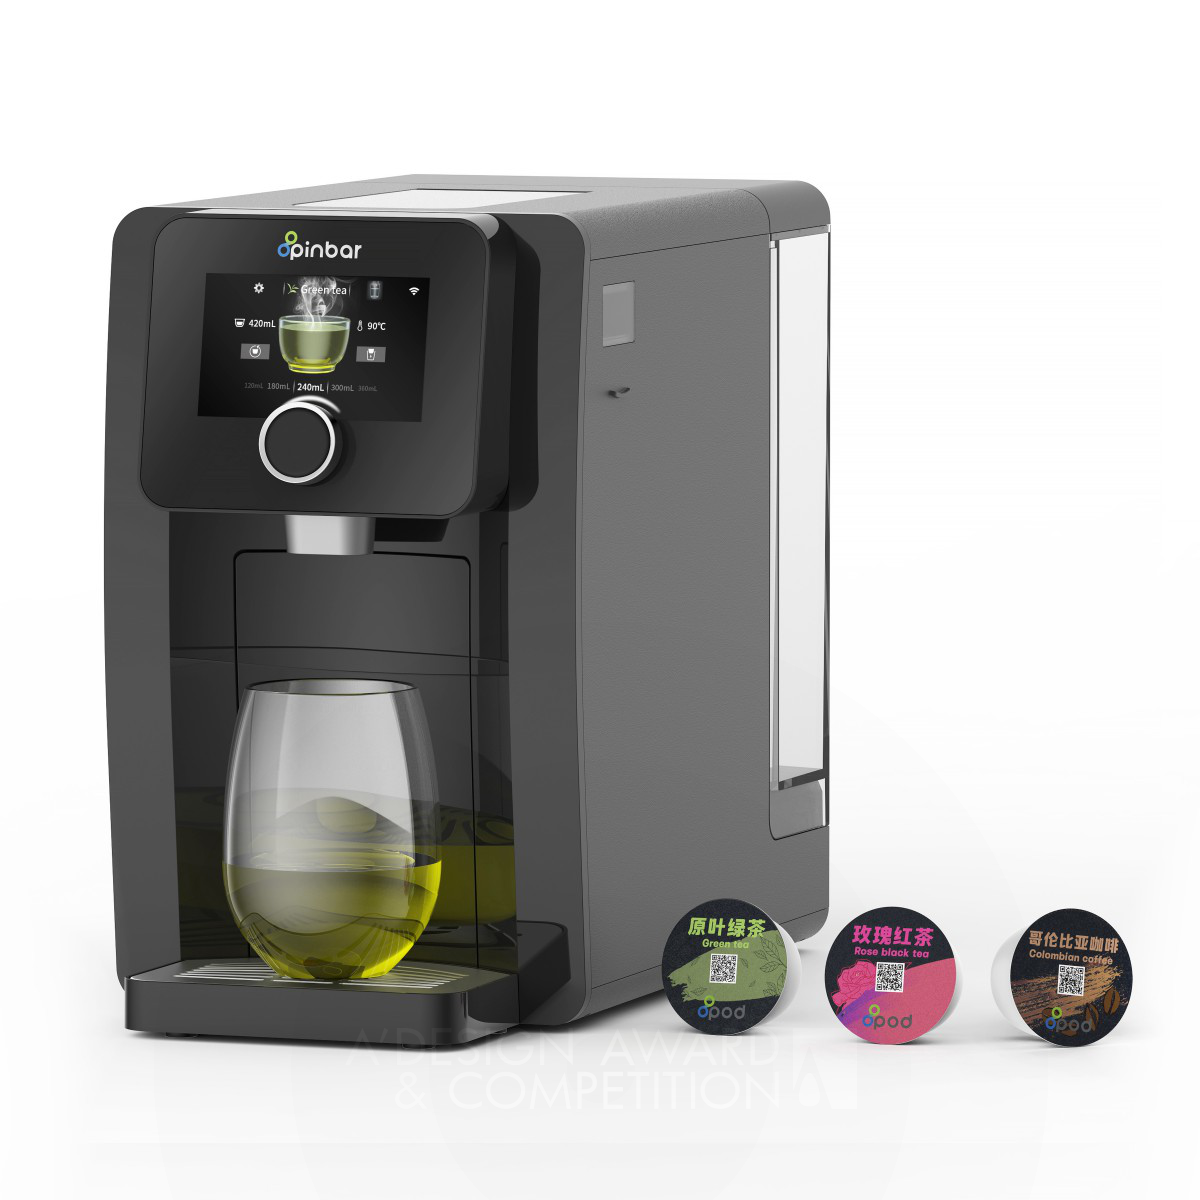 Pinbar Tea And Beverage Capsule Machine